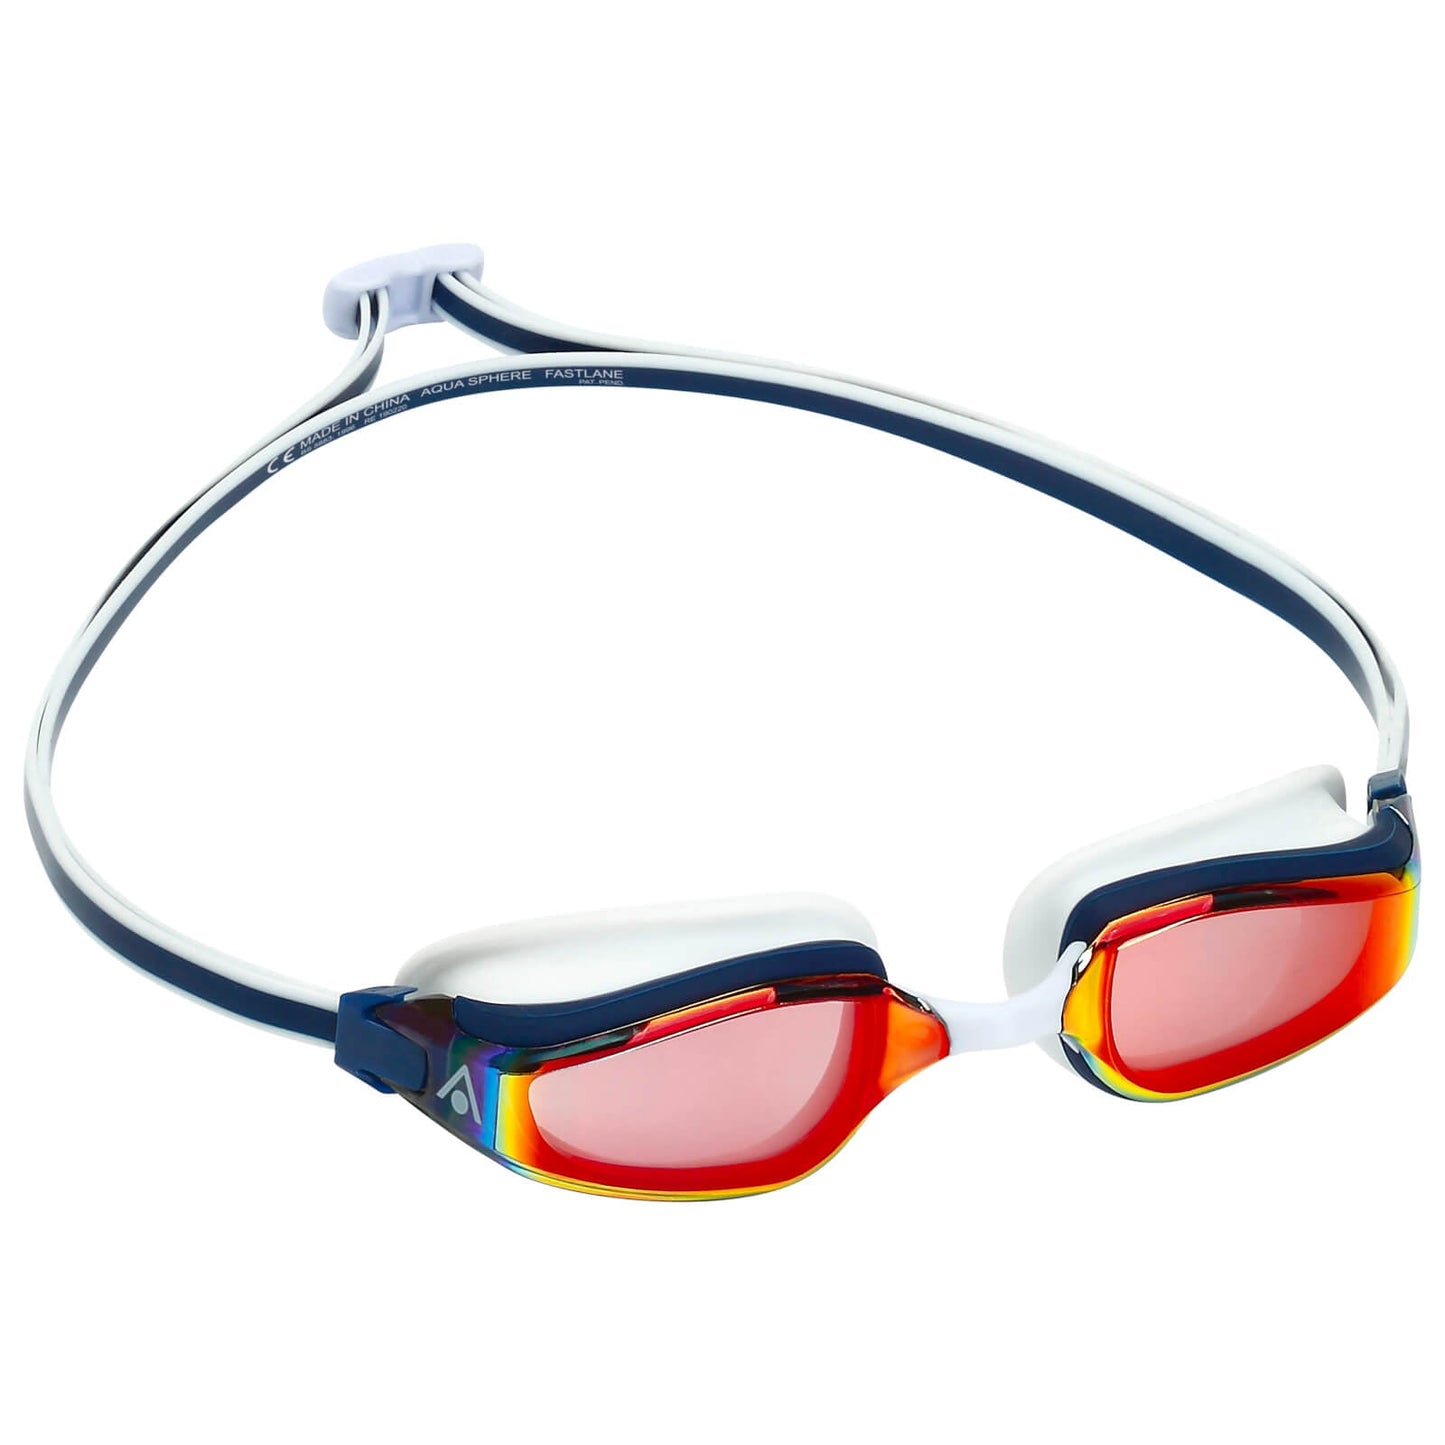 Men's Swimming Goggles Aqua Sphere Fastlane Adult Fitness Pool Navy Blue - Red Titanium Mirror Alternate 2